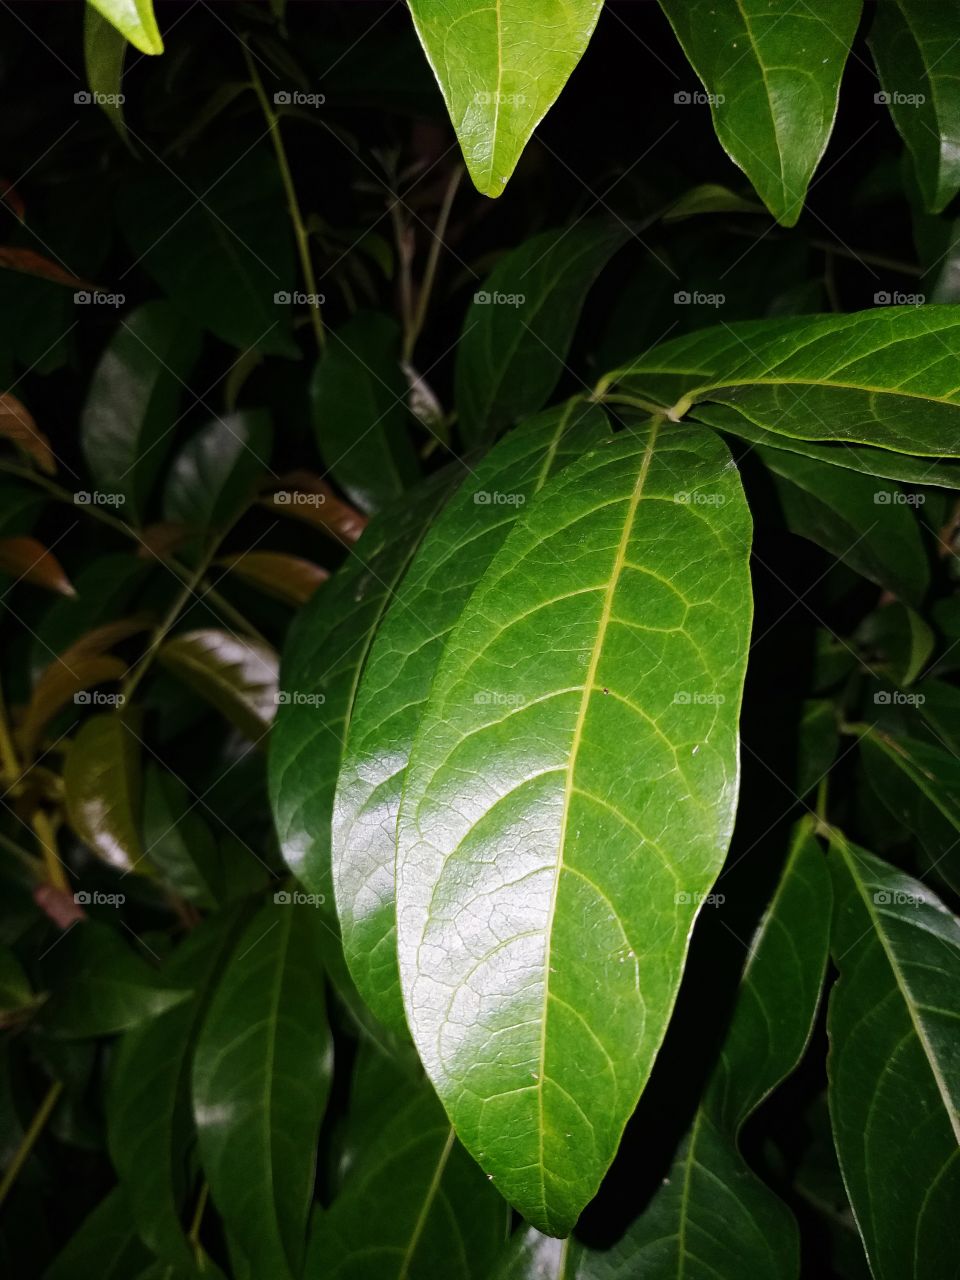 leaf is green